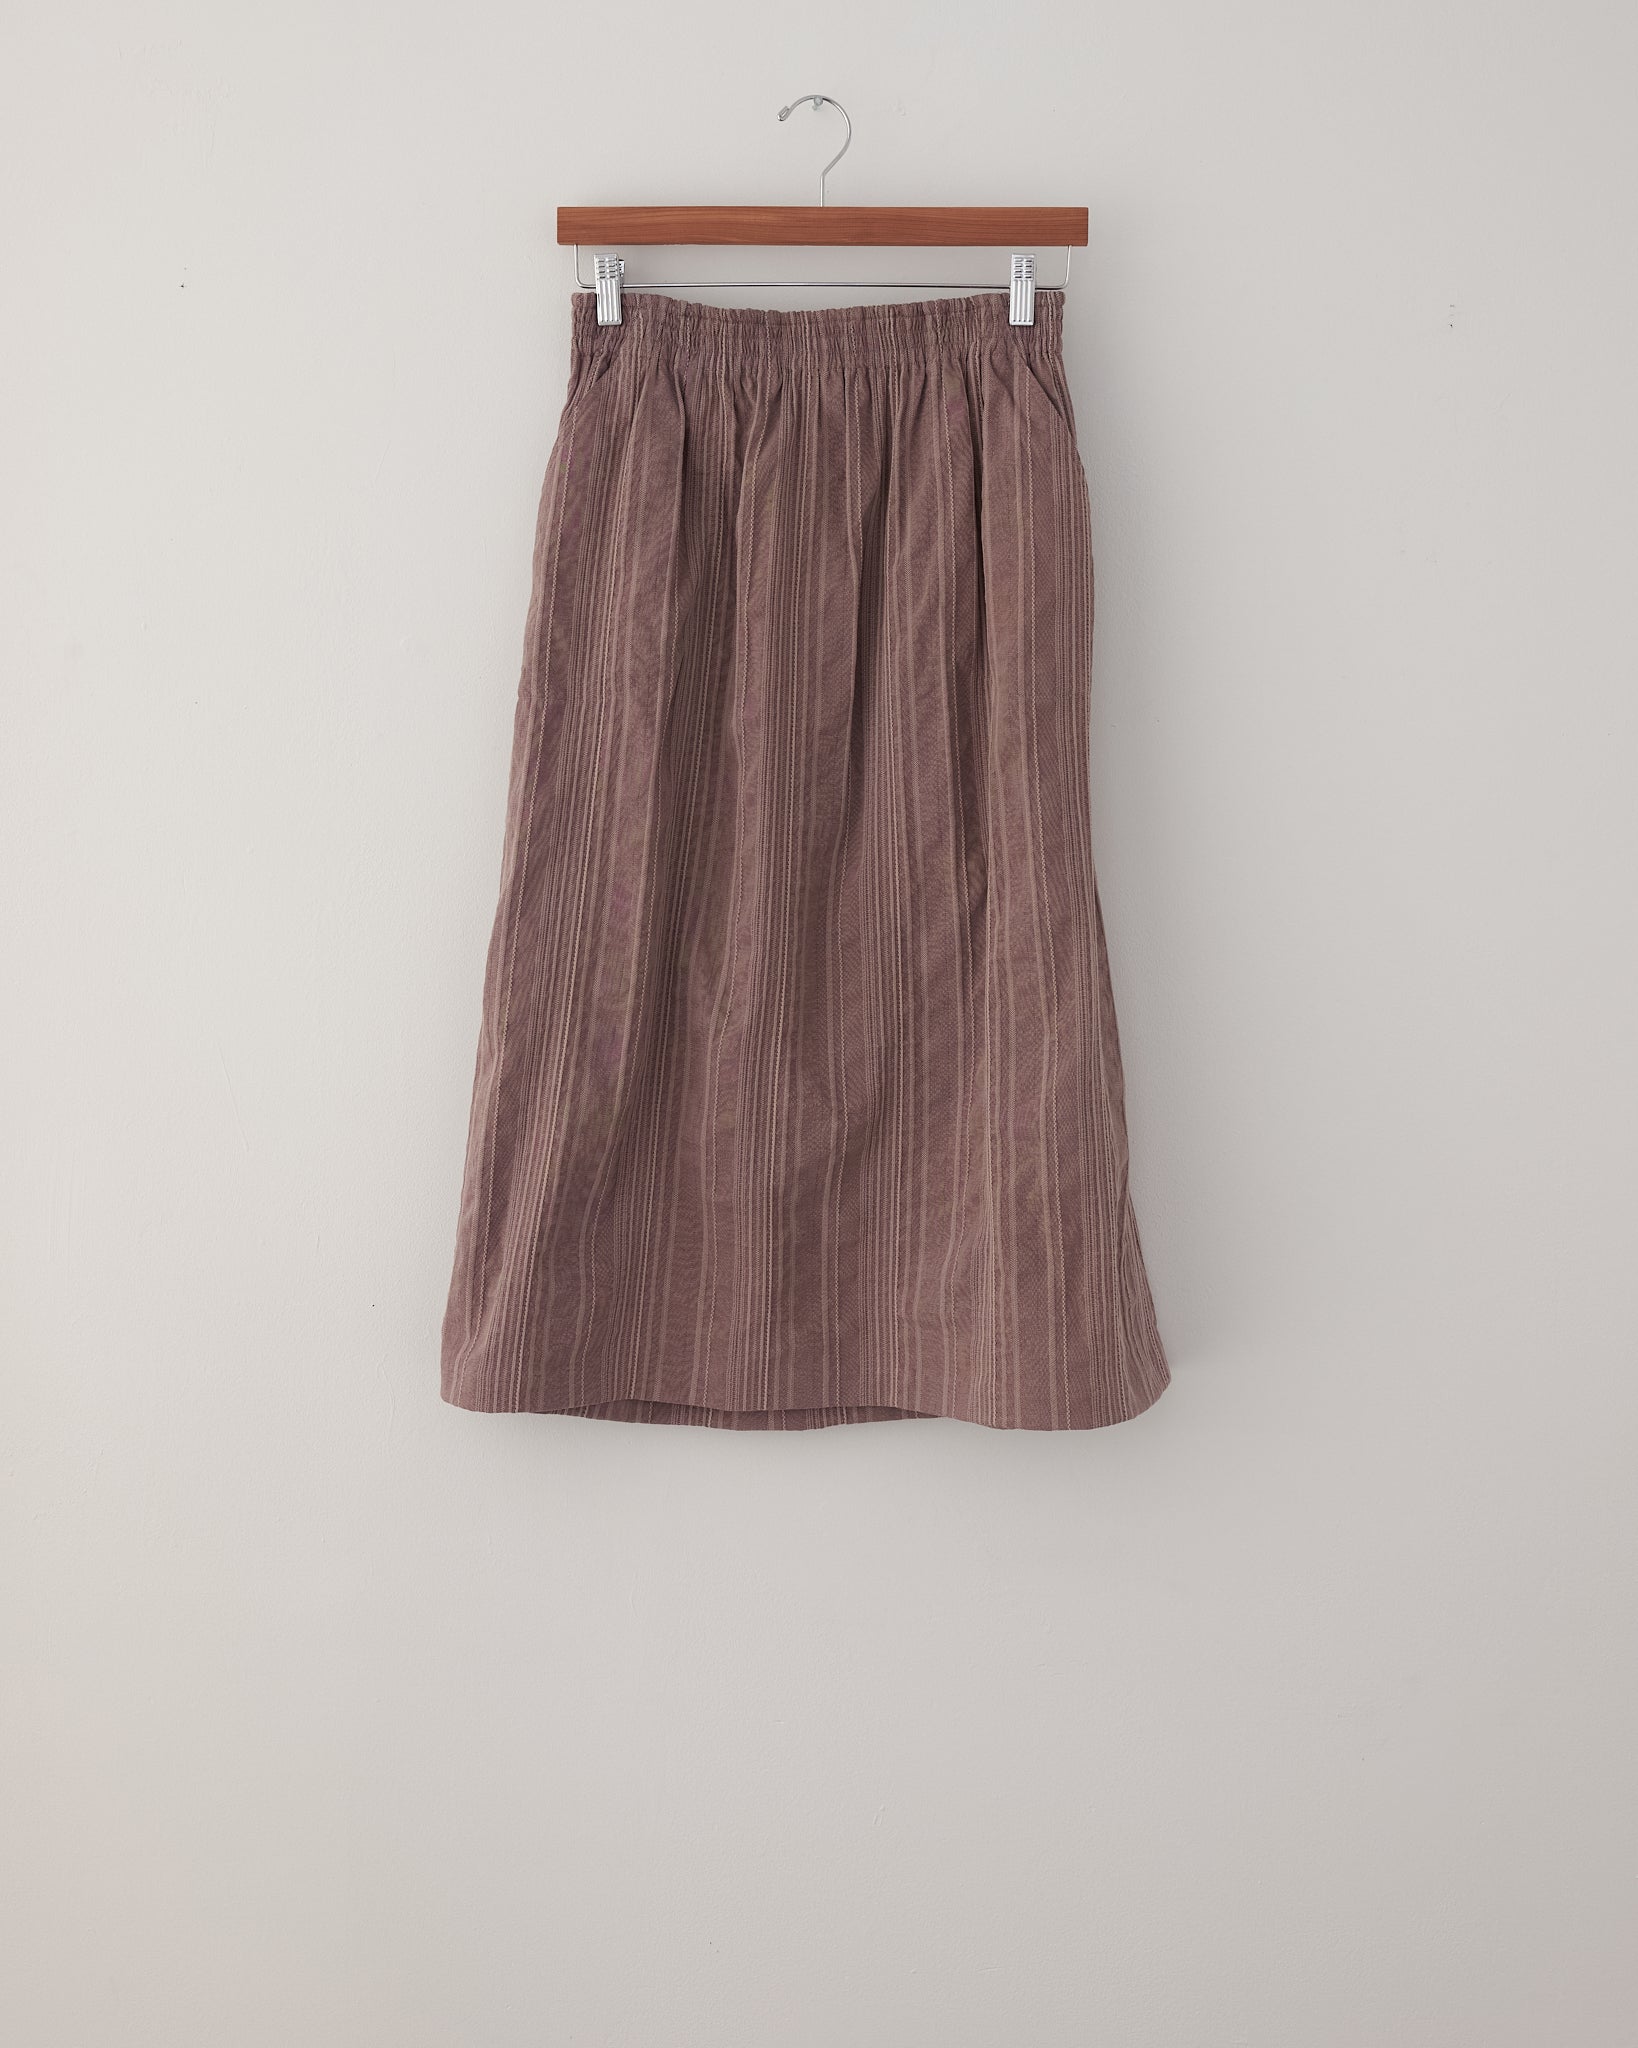 Vintage Skirt, 70s Weaved Cotton